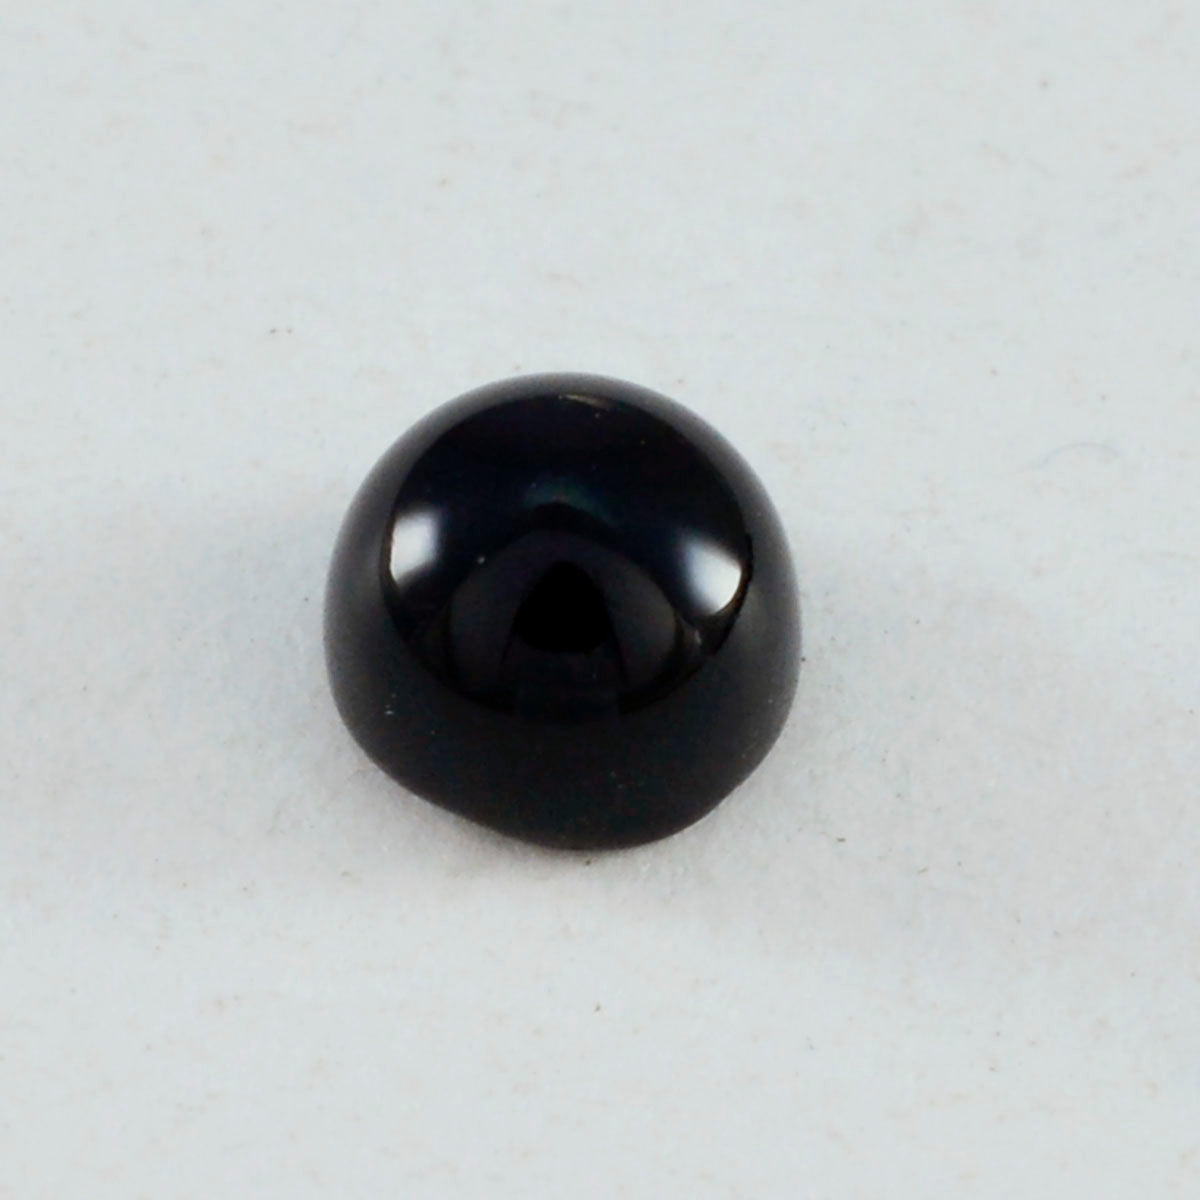 Riyogems 1PC Black Onyx Cabochon 8x8 mm Round Shape Nice Quality Gems